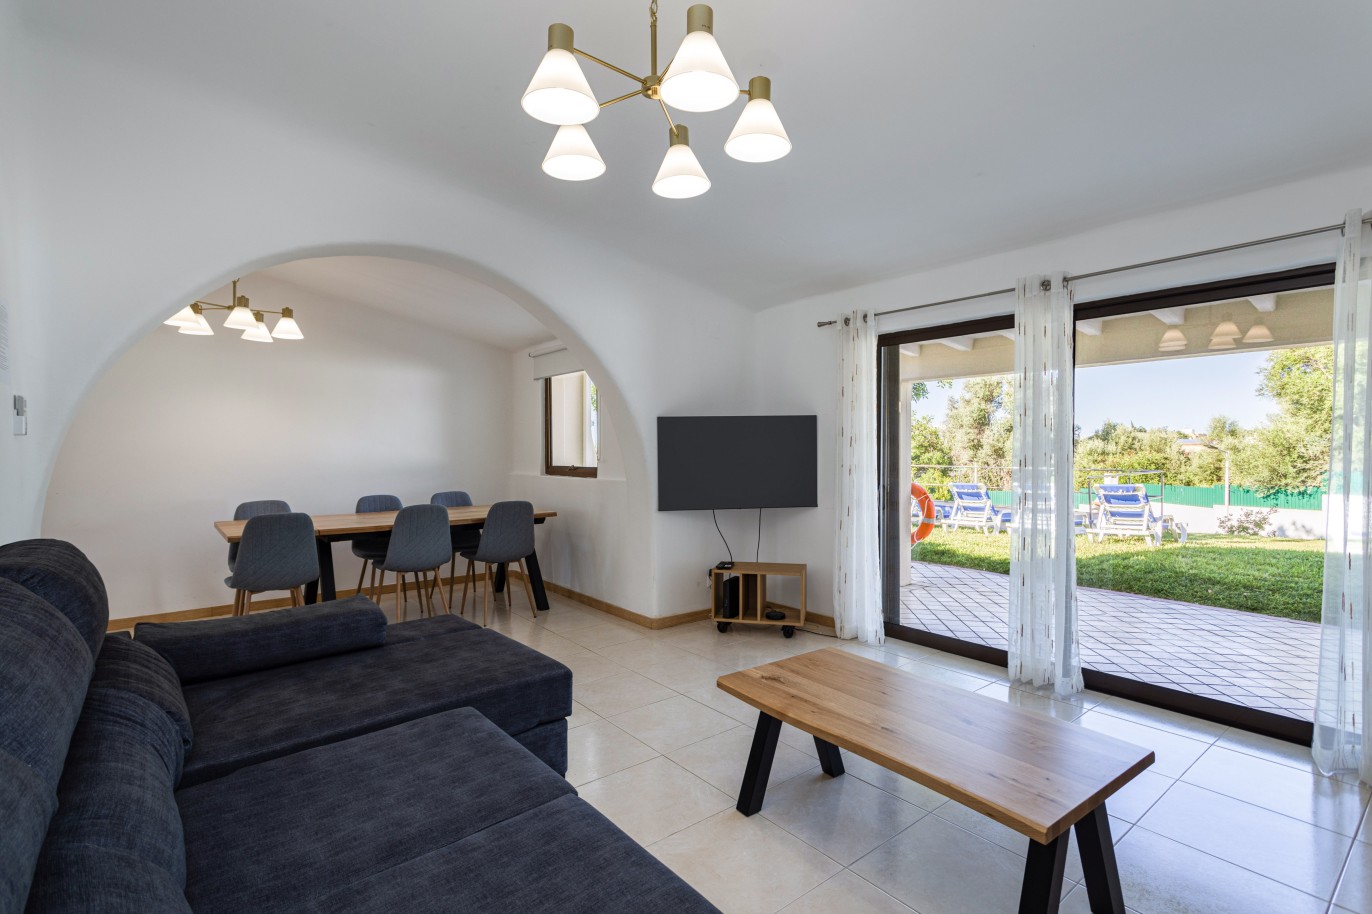 4 bedroom villa with pool, for sale in Albufeira, Algarve_233592